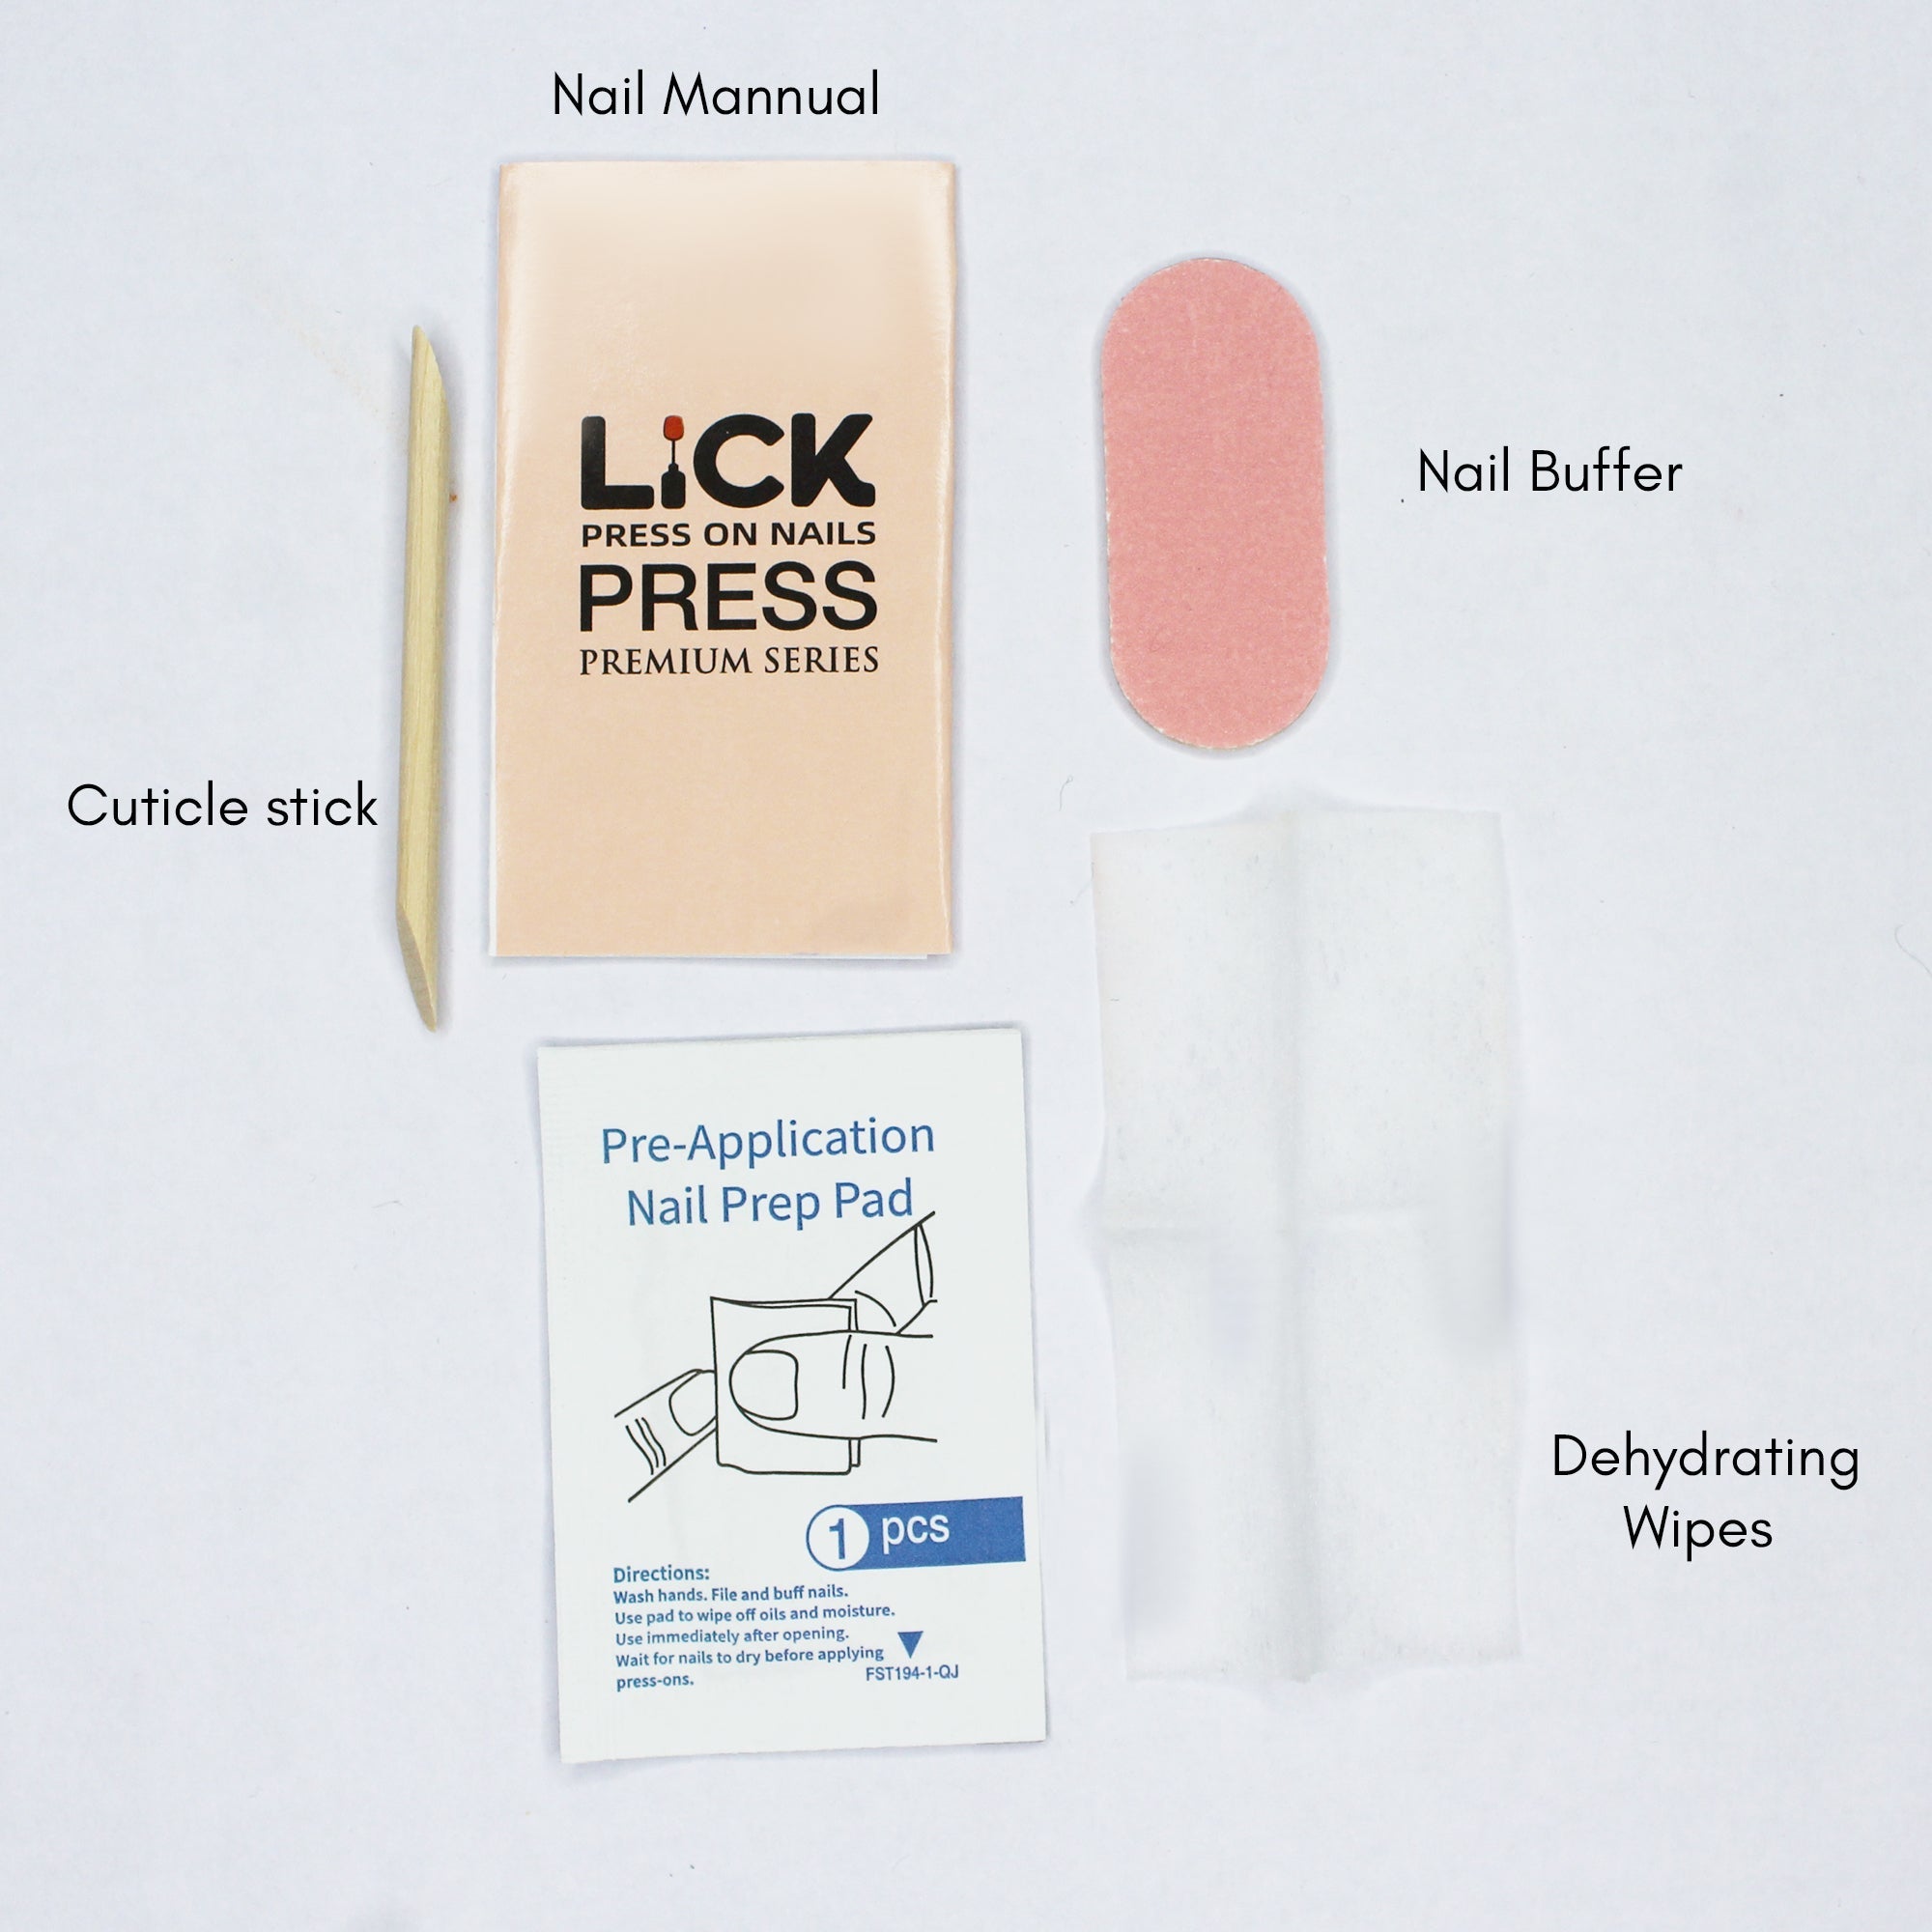 Lick Nail Glossy Finish Navy Blue With Silver Shimmer Hints Press on Toe Nails Pack of 26 Pcs